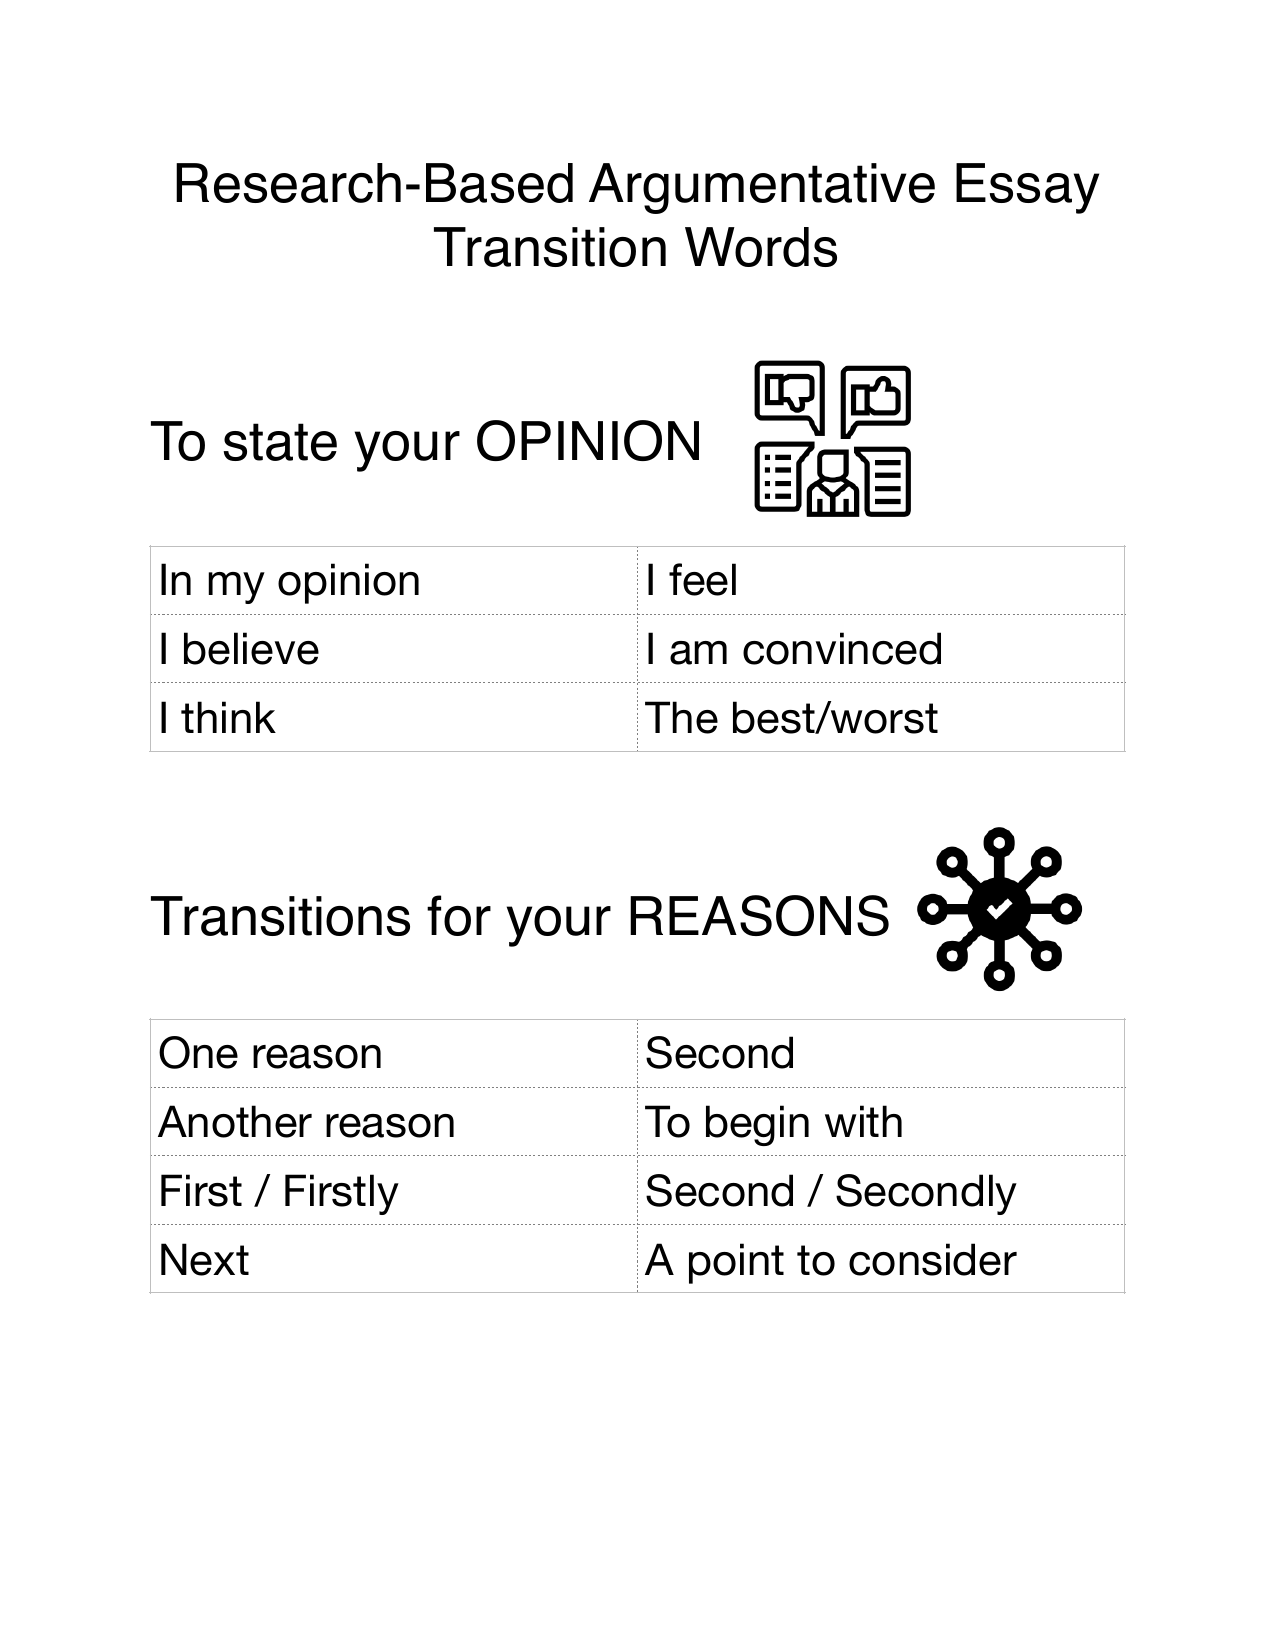 transitions in argumentative essay